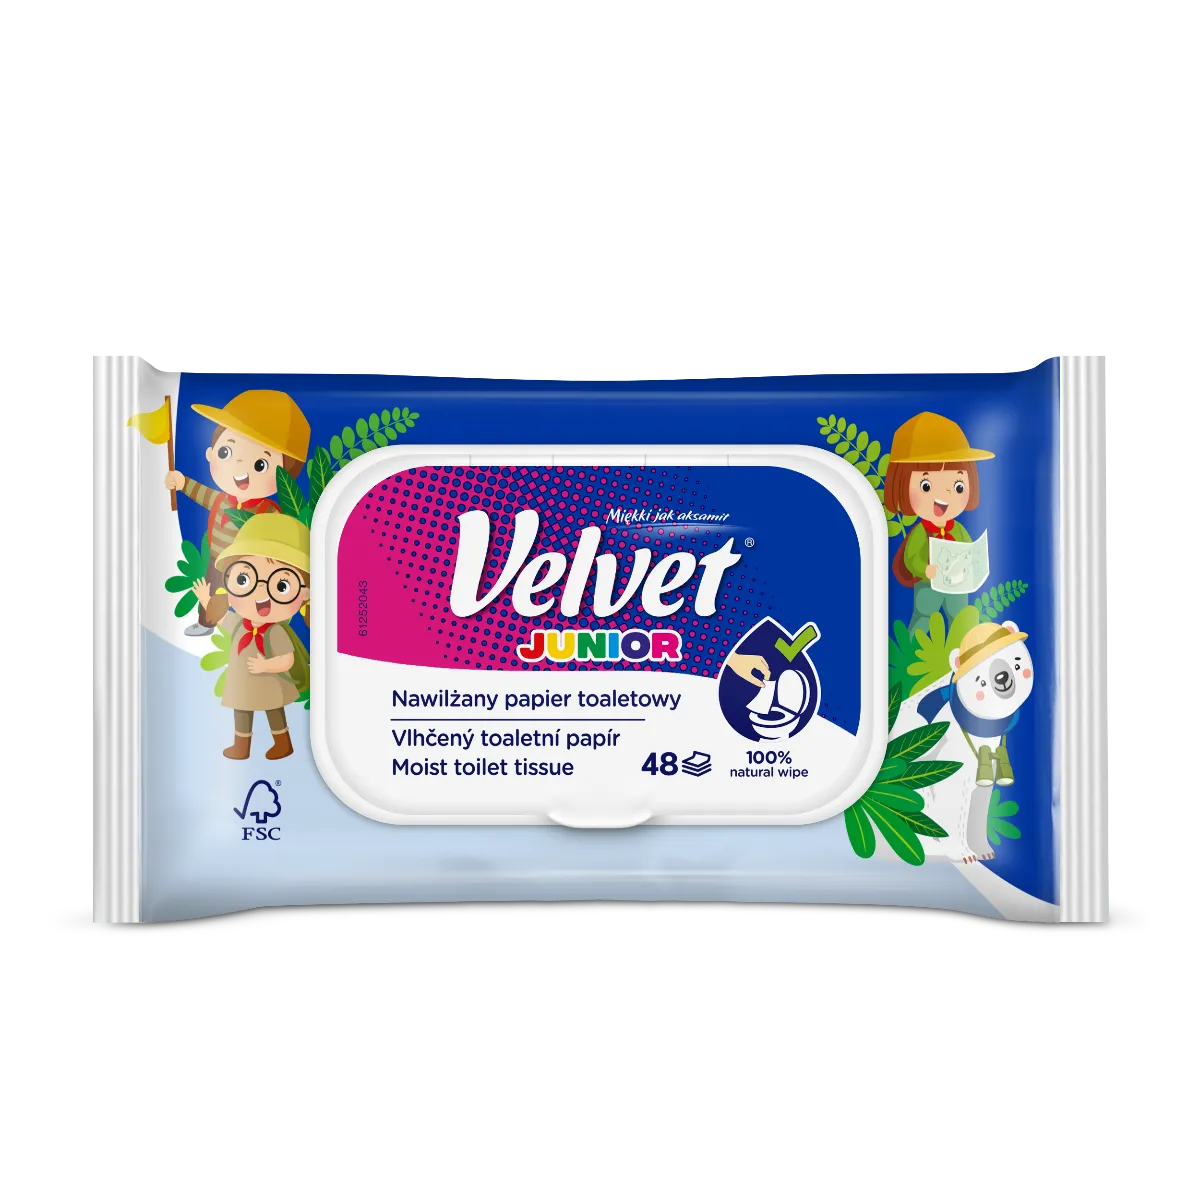 Velvet Junior nawilżany papier toaletowy, 1 szt. 